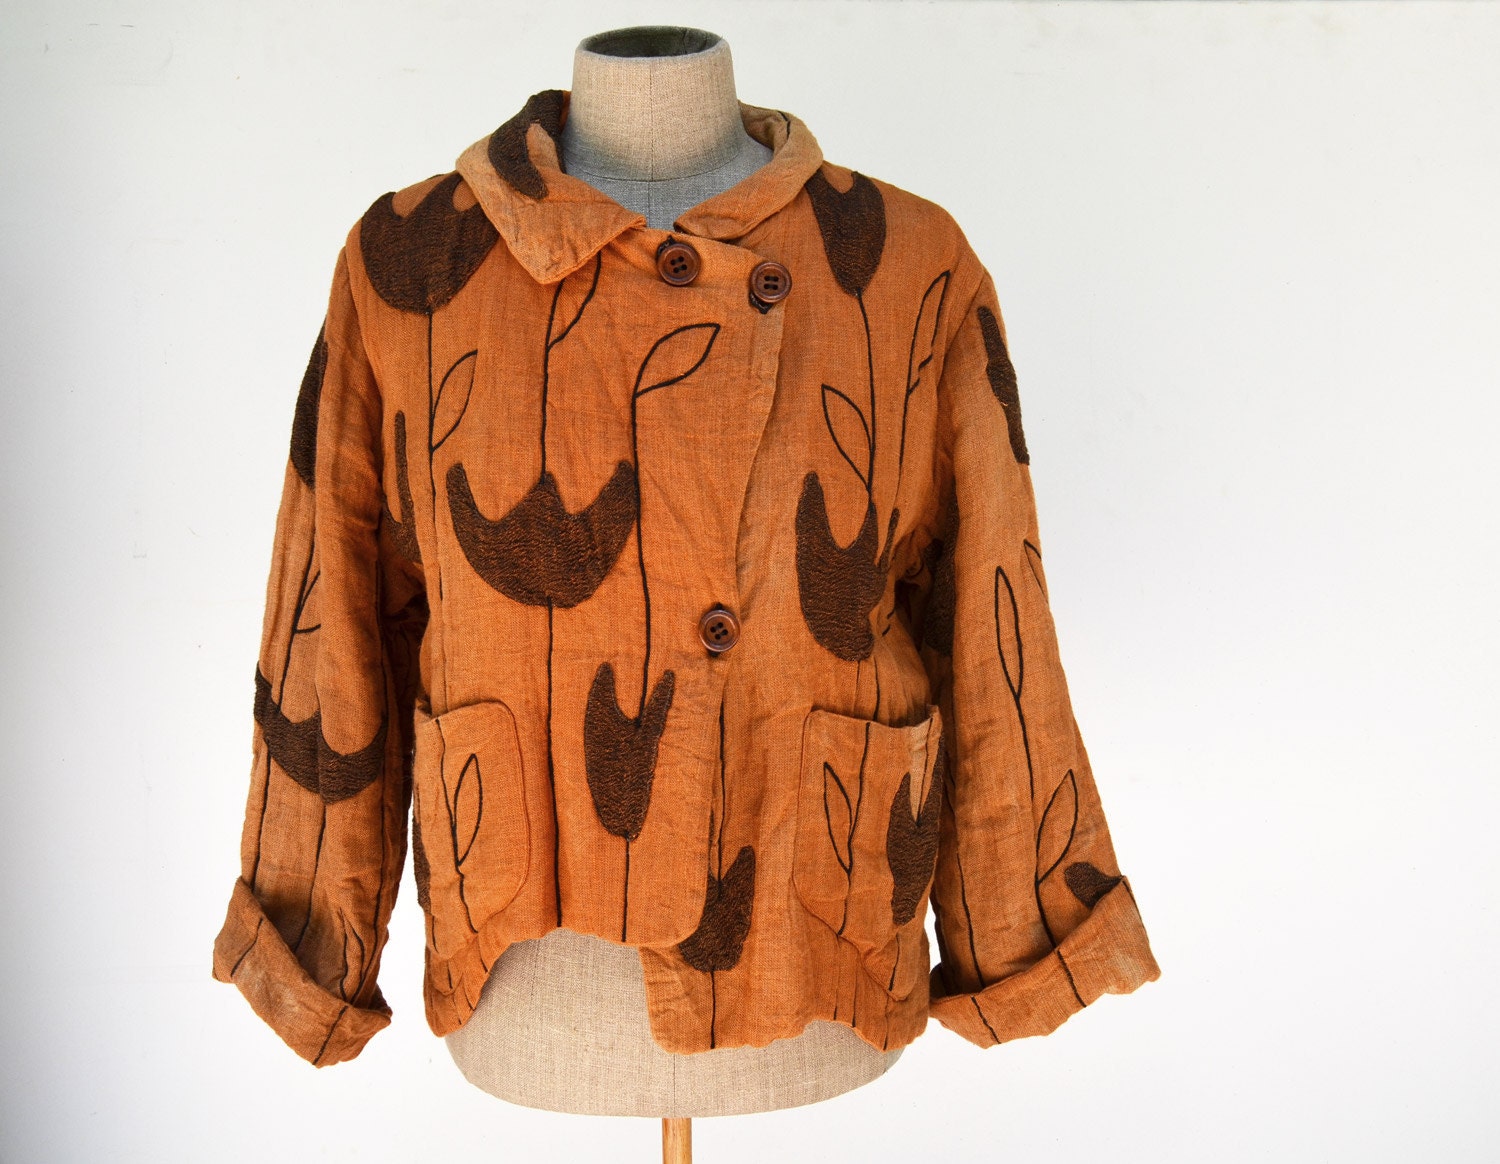 PURE Linen jacket by ZOJKA, unique ecofriendly, orange, asymmetrical, ooak, woman fashion design, wooden bottons, big pocets, L size - ZOJKAshop